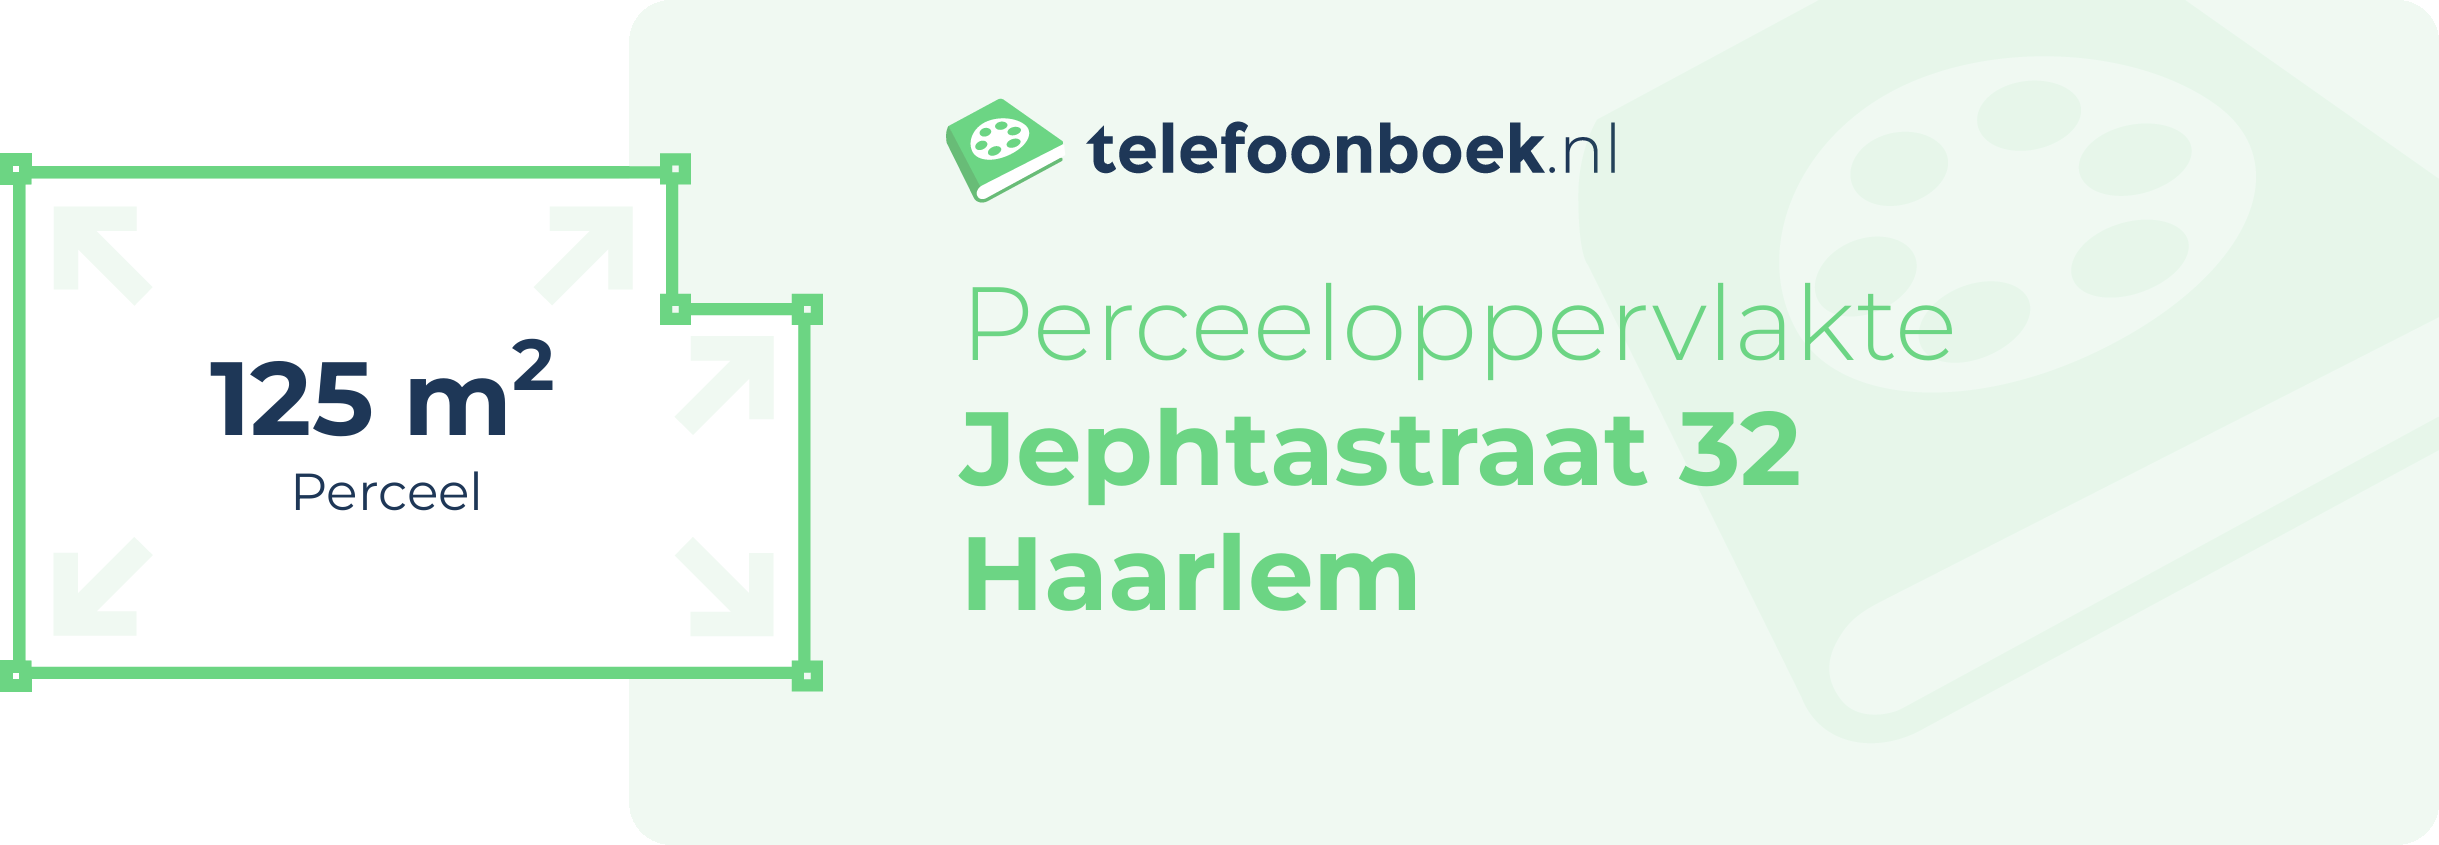 Perceeloppervlakte Jephtastraat 32 Haarlem